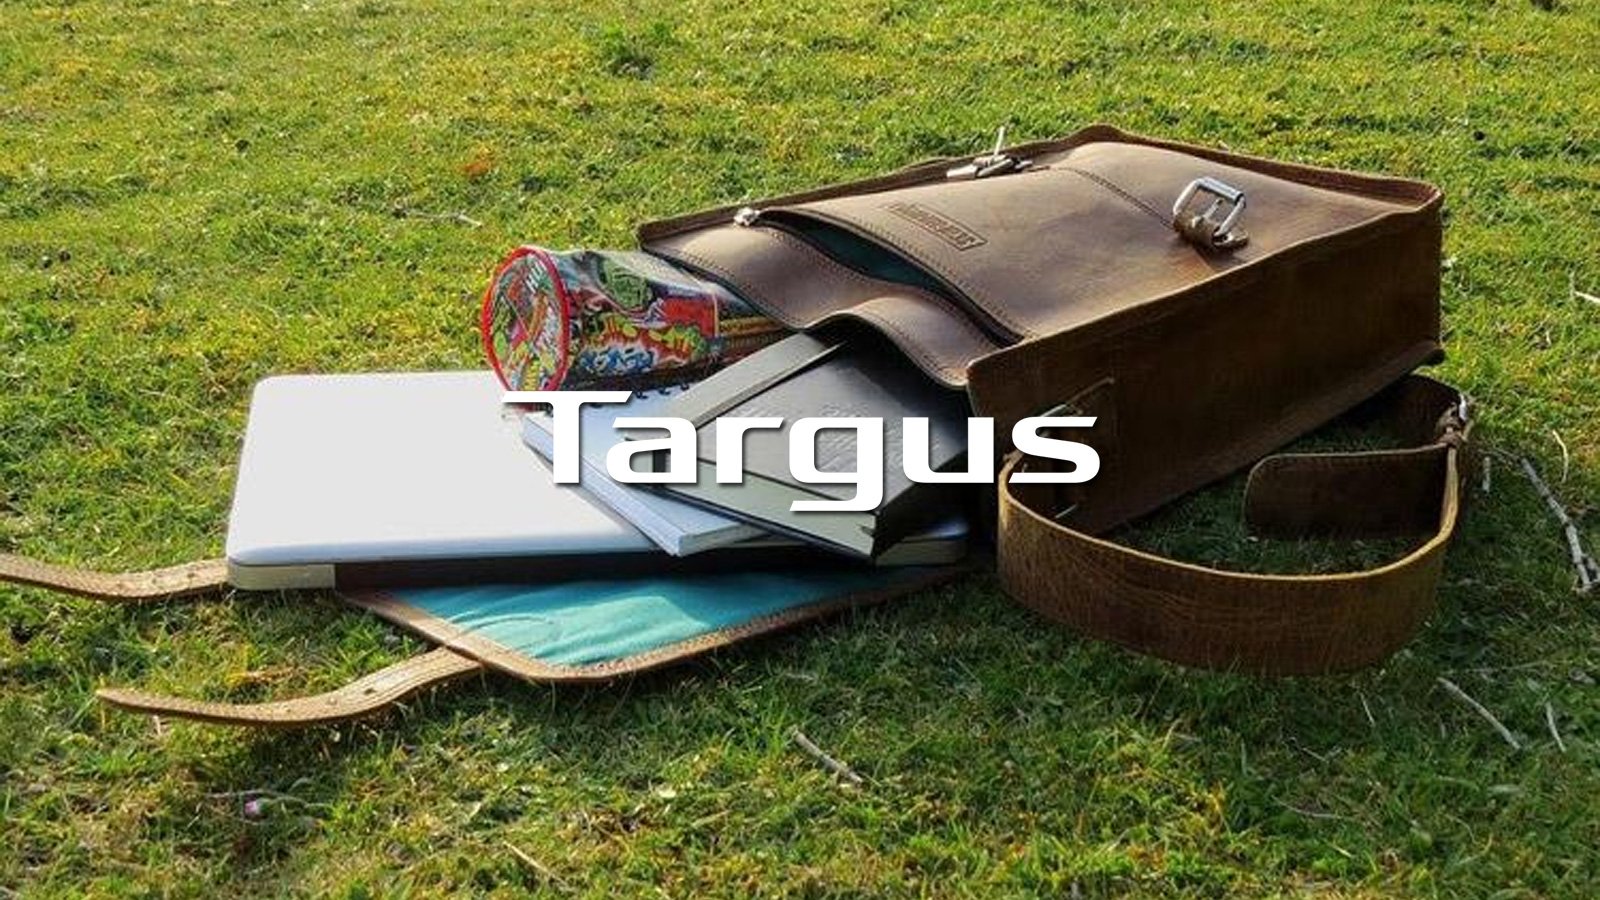 Targus bag with the logo